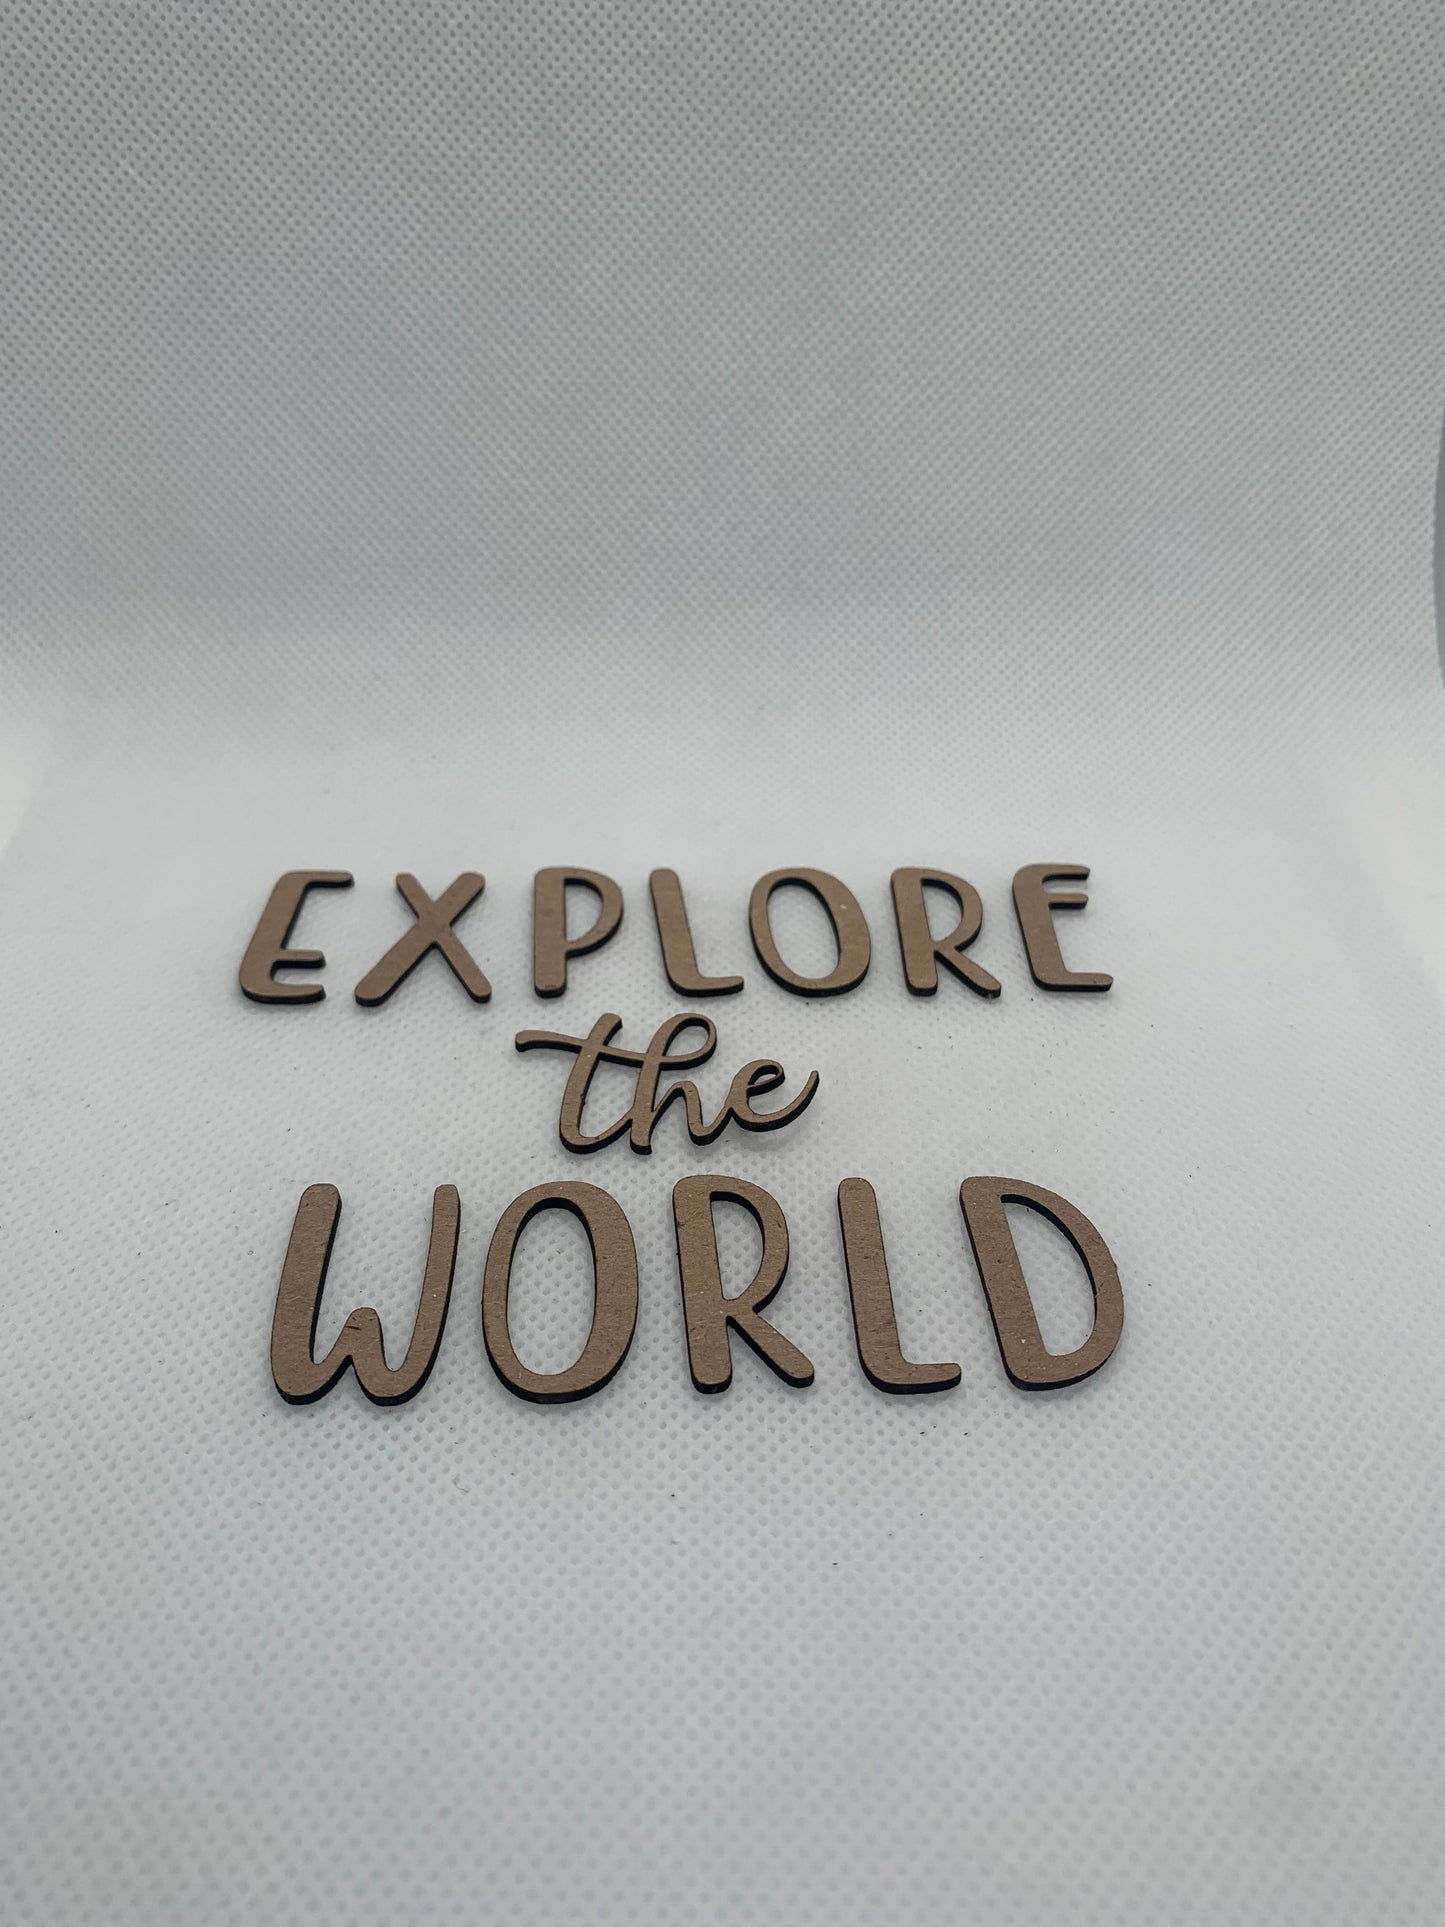 Explore the World title - Creative Designs By Kari